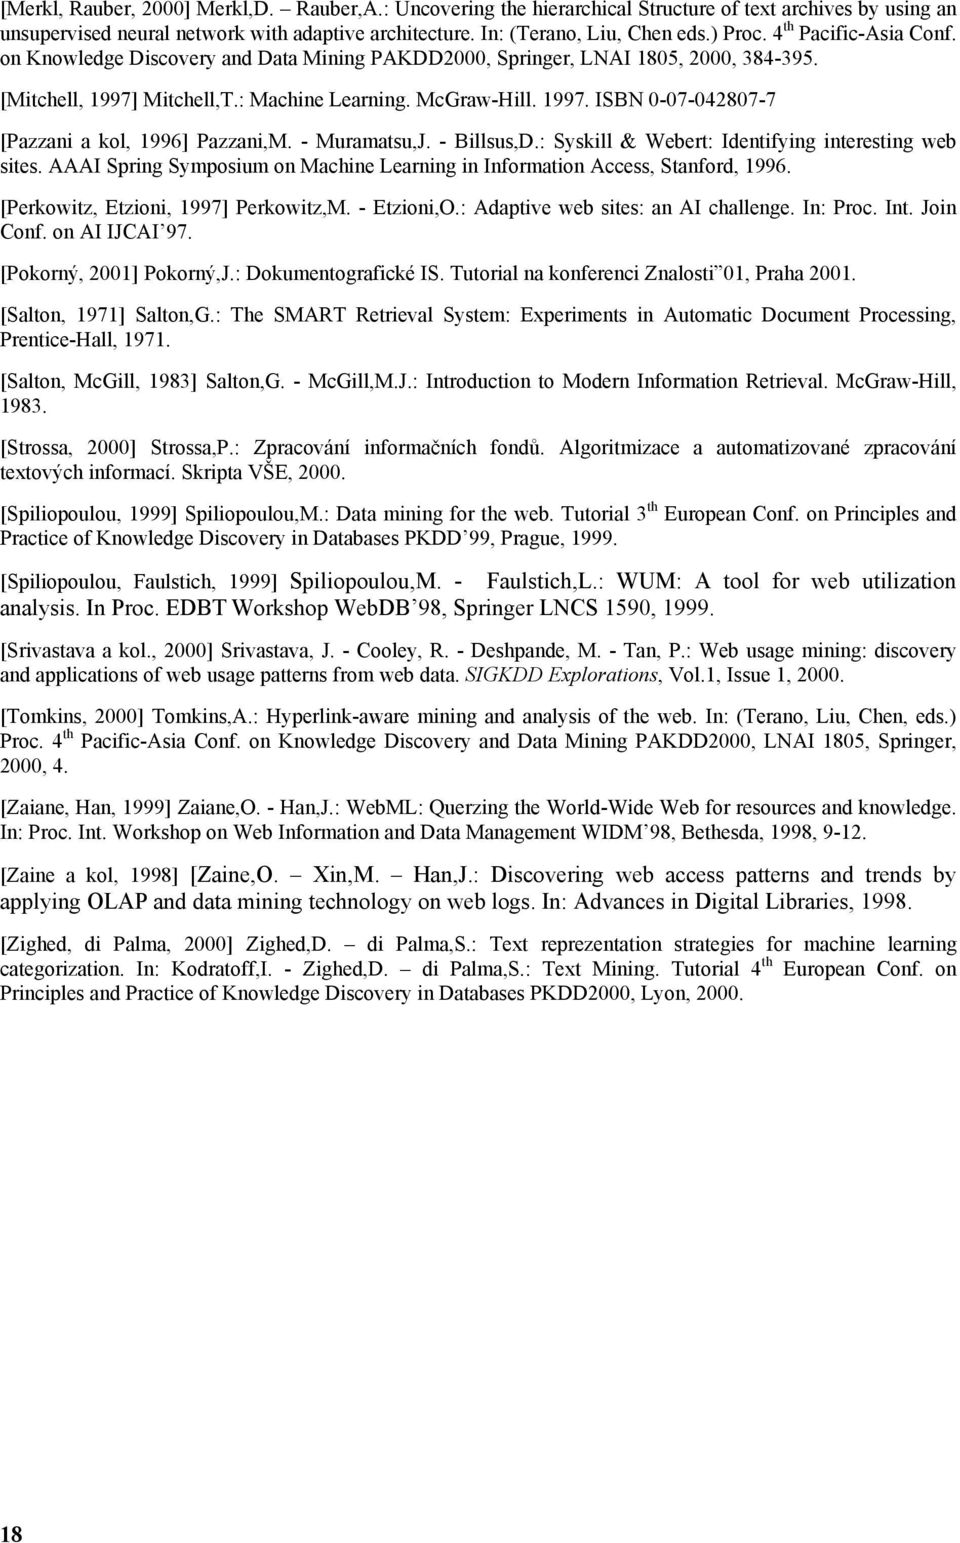 - Muramatsu,J. - Billsus,D.: Syskill & Webert: Identifying interesting web sites. AAAI Spring Symposium on Machine Learning in Information Access, Stanford, 1996.